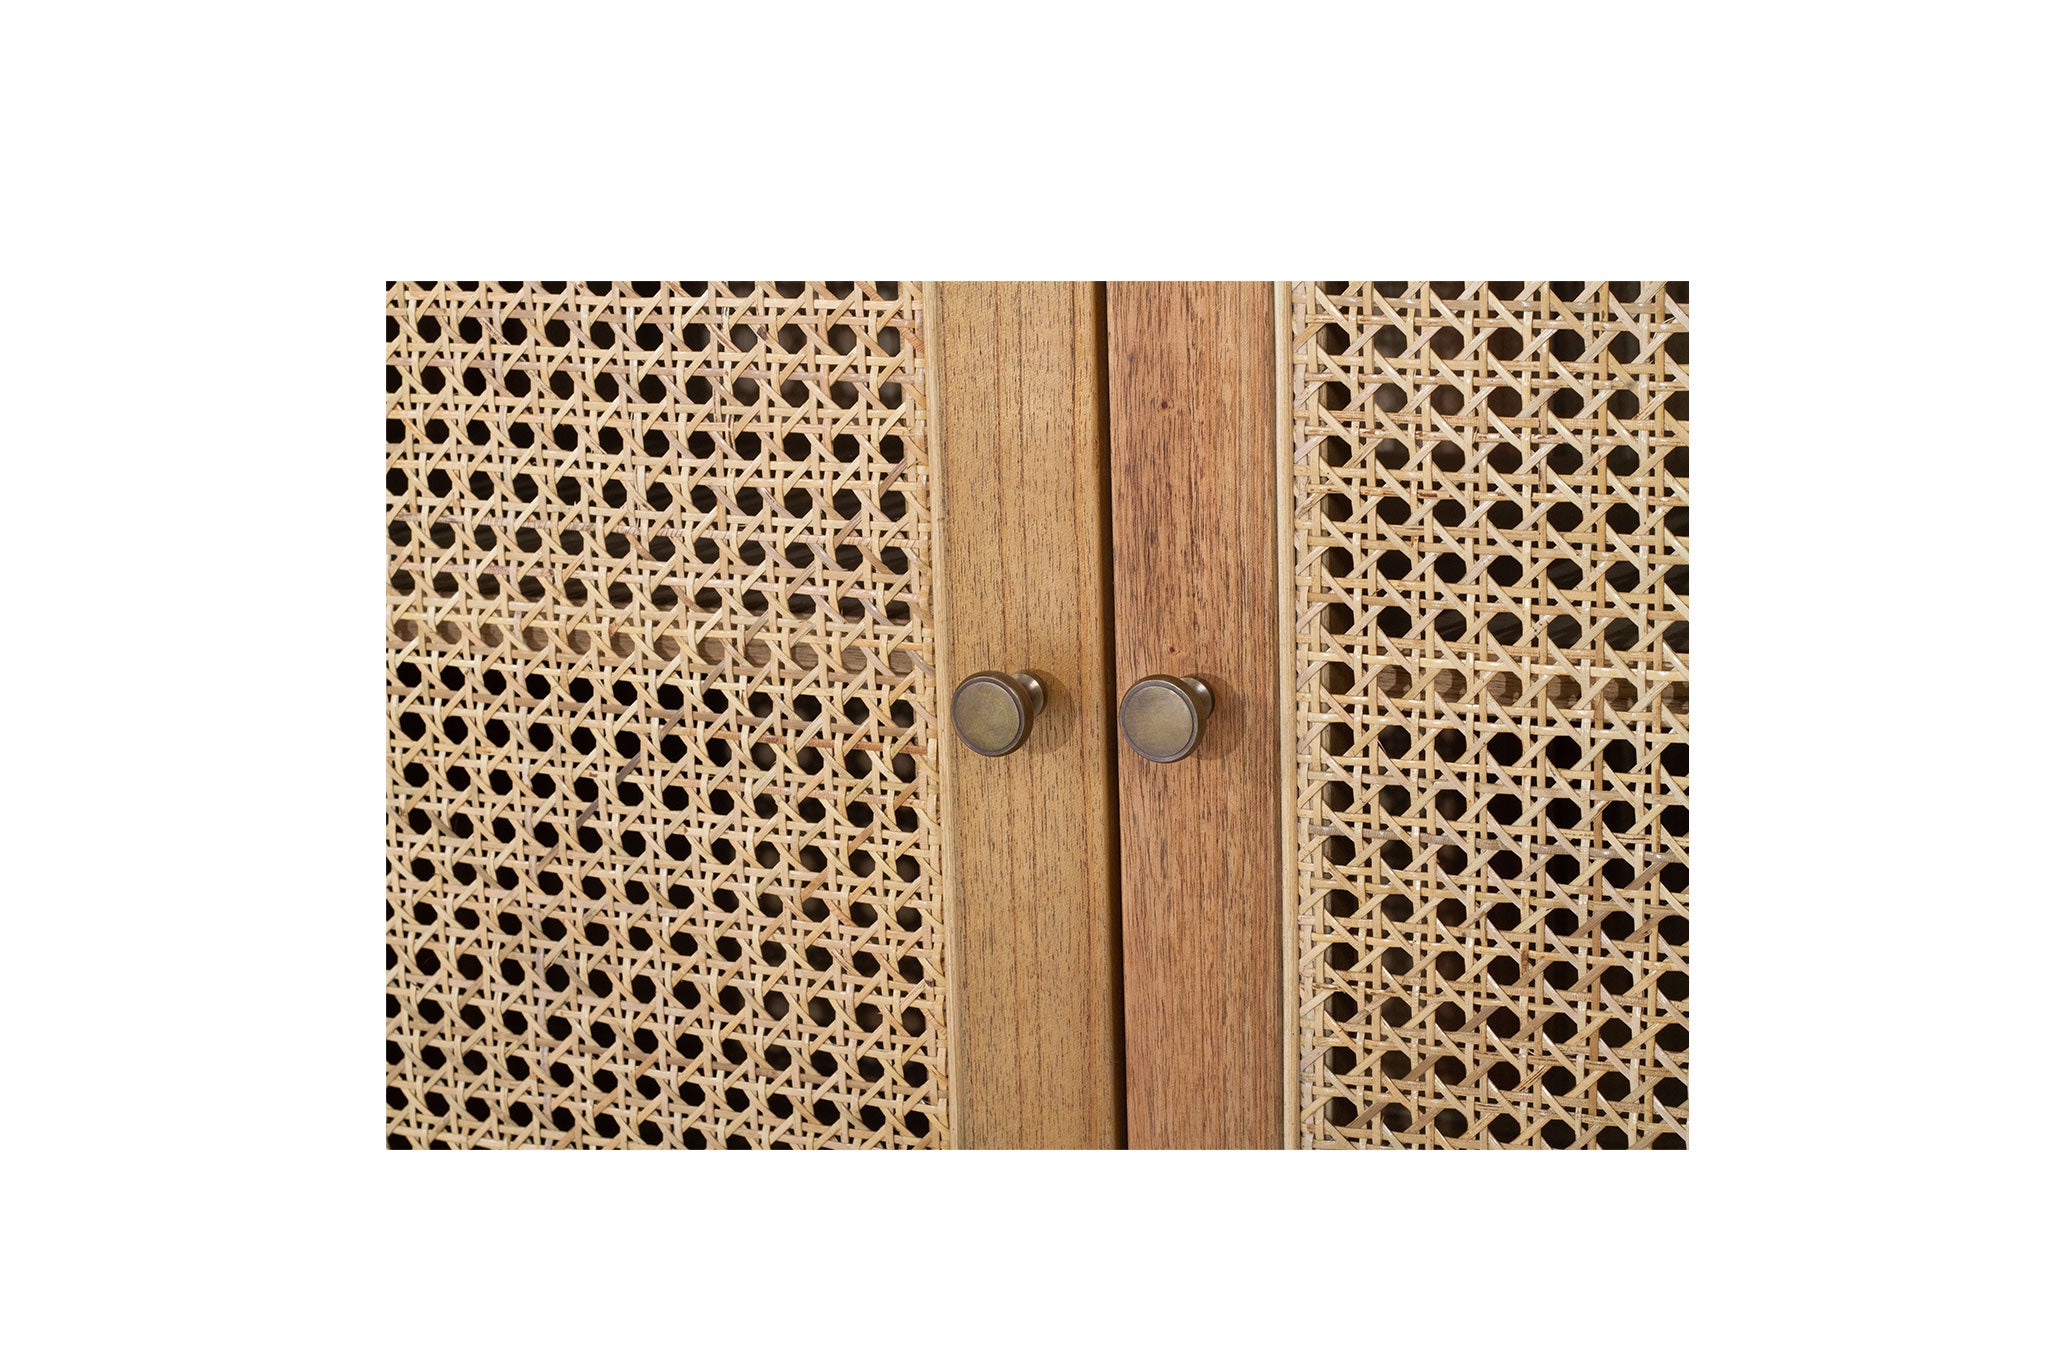 Vaucluse Mahogany & Rattan Six Door Sideboard – Weathered Oak